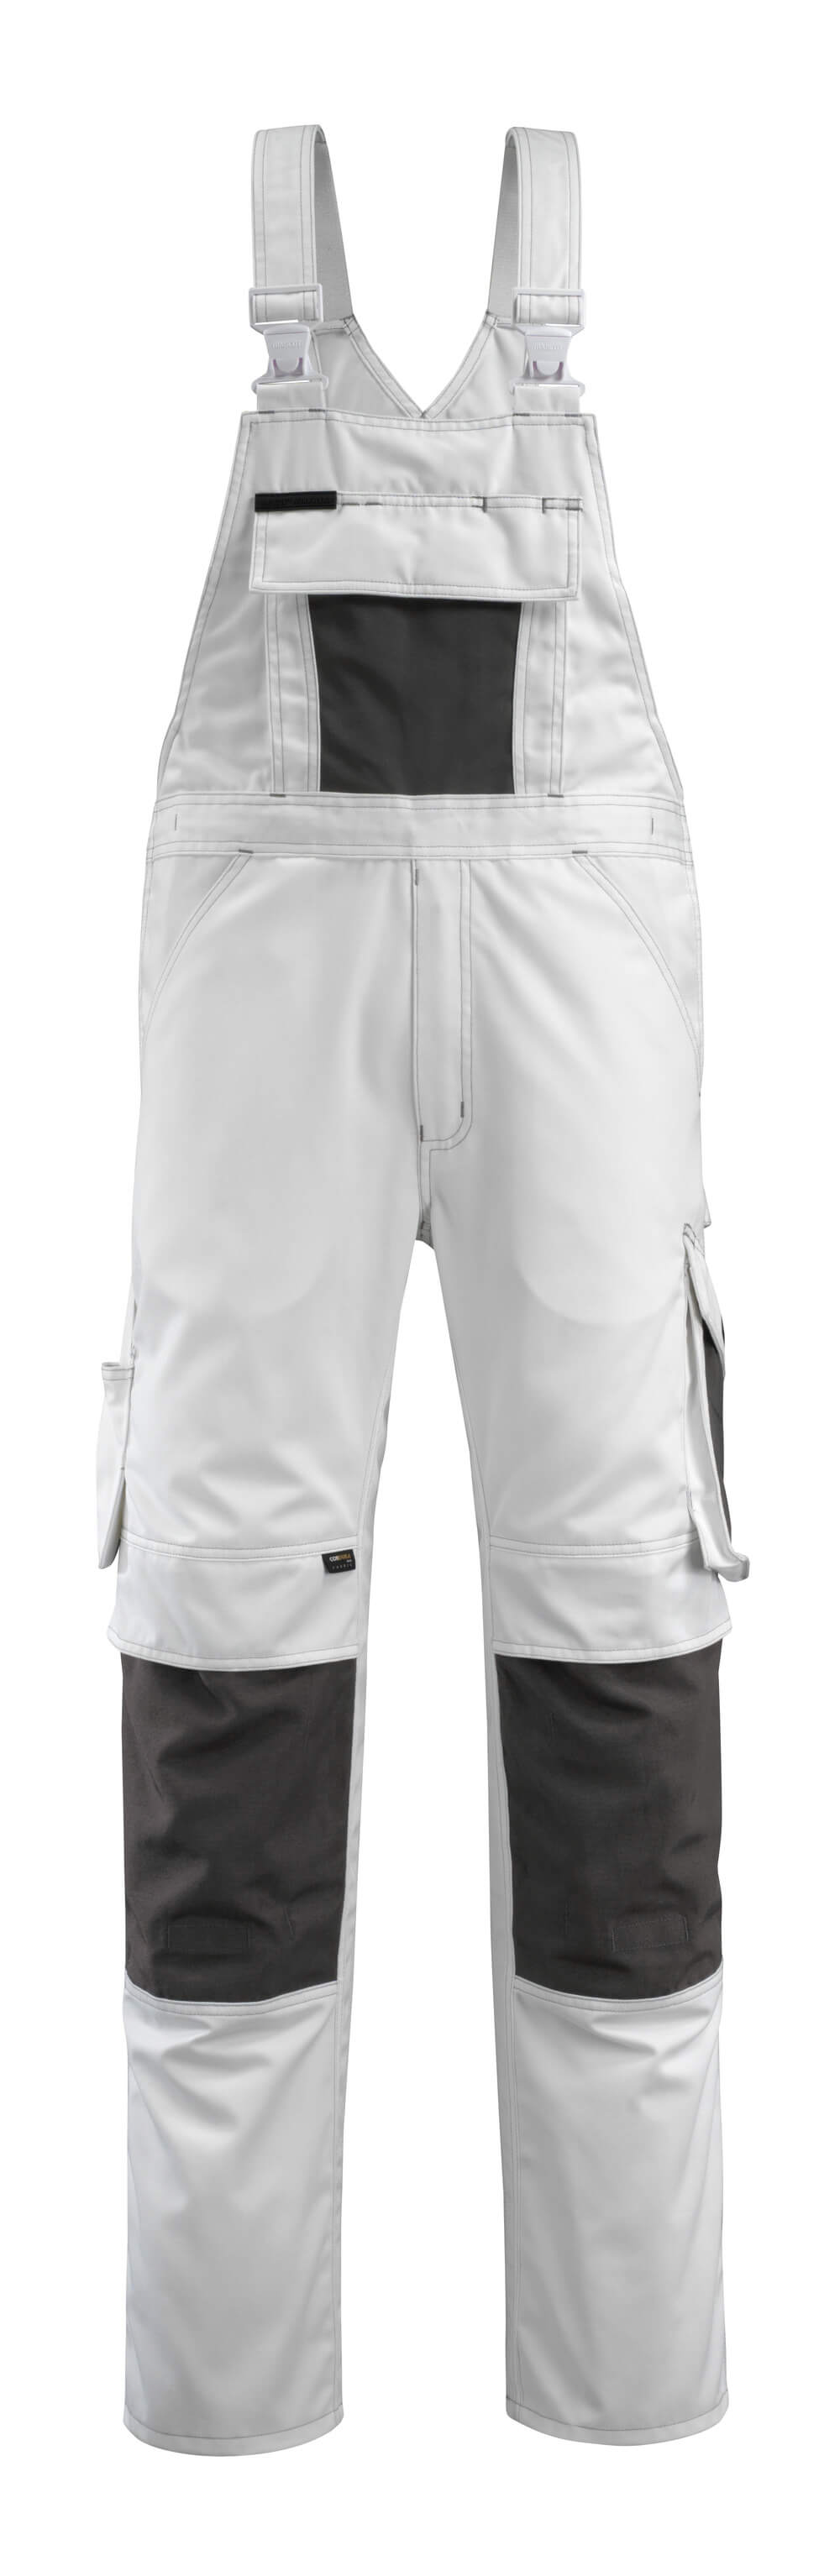 Mascot UNIQUE  Augsburg Bib & Brace with kneepad pockets 12169 white/dark anthracite